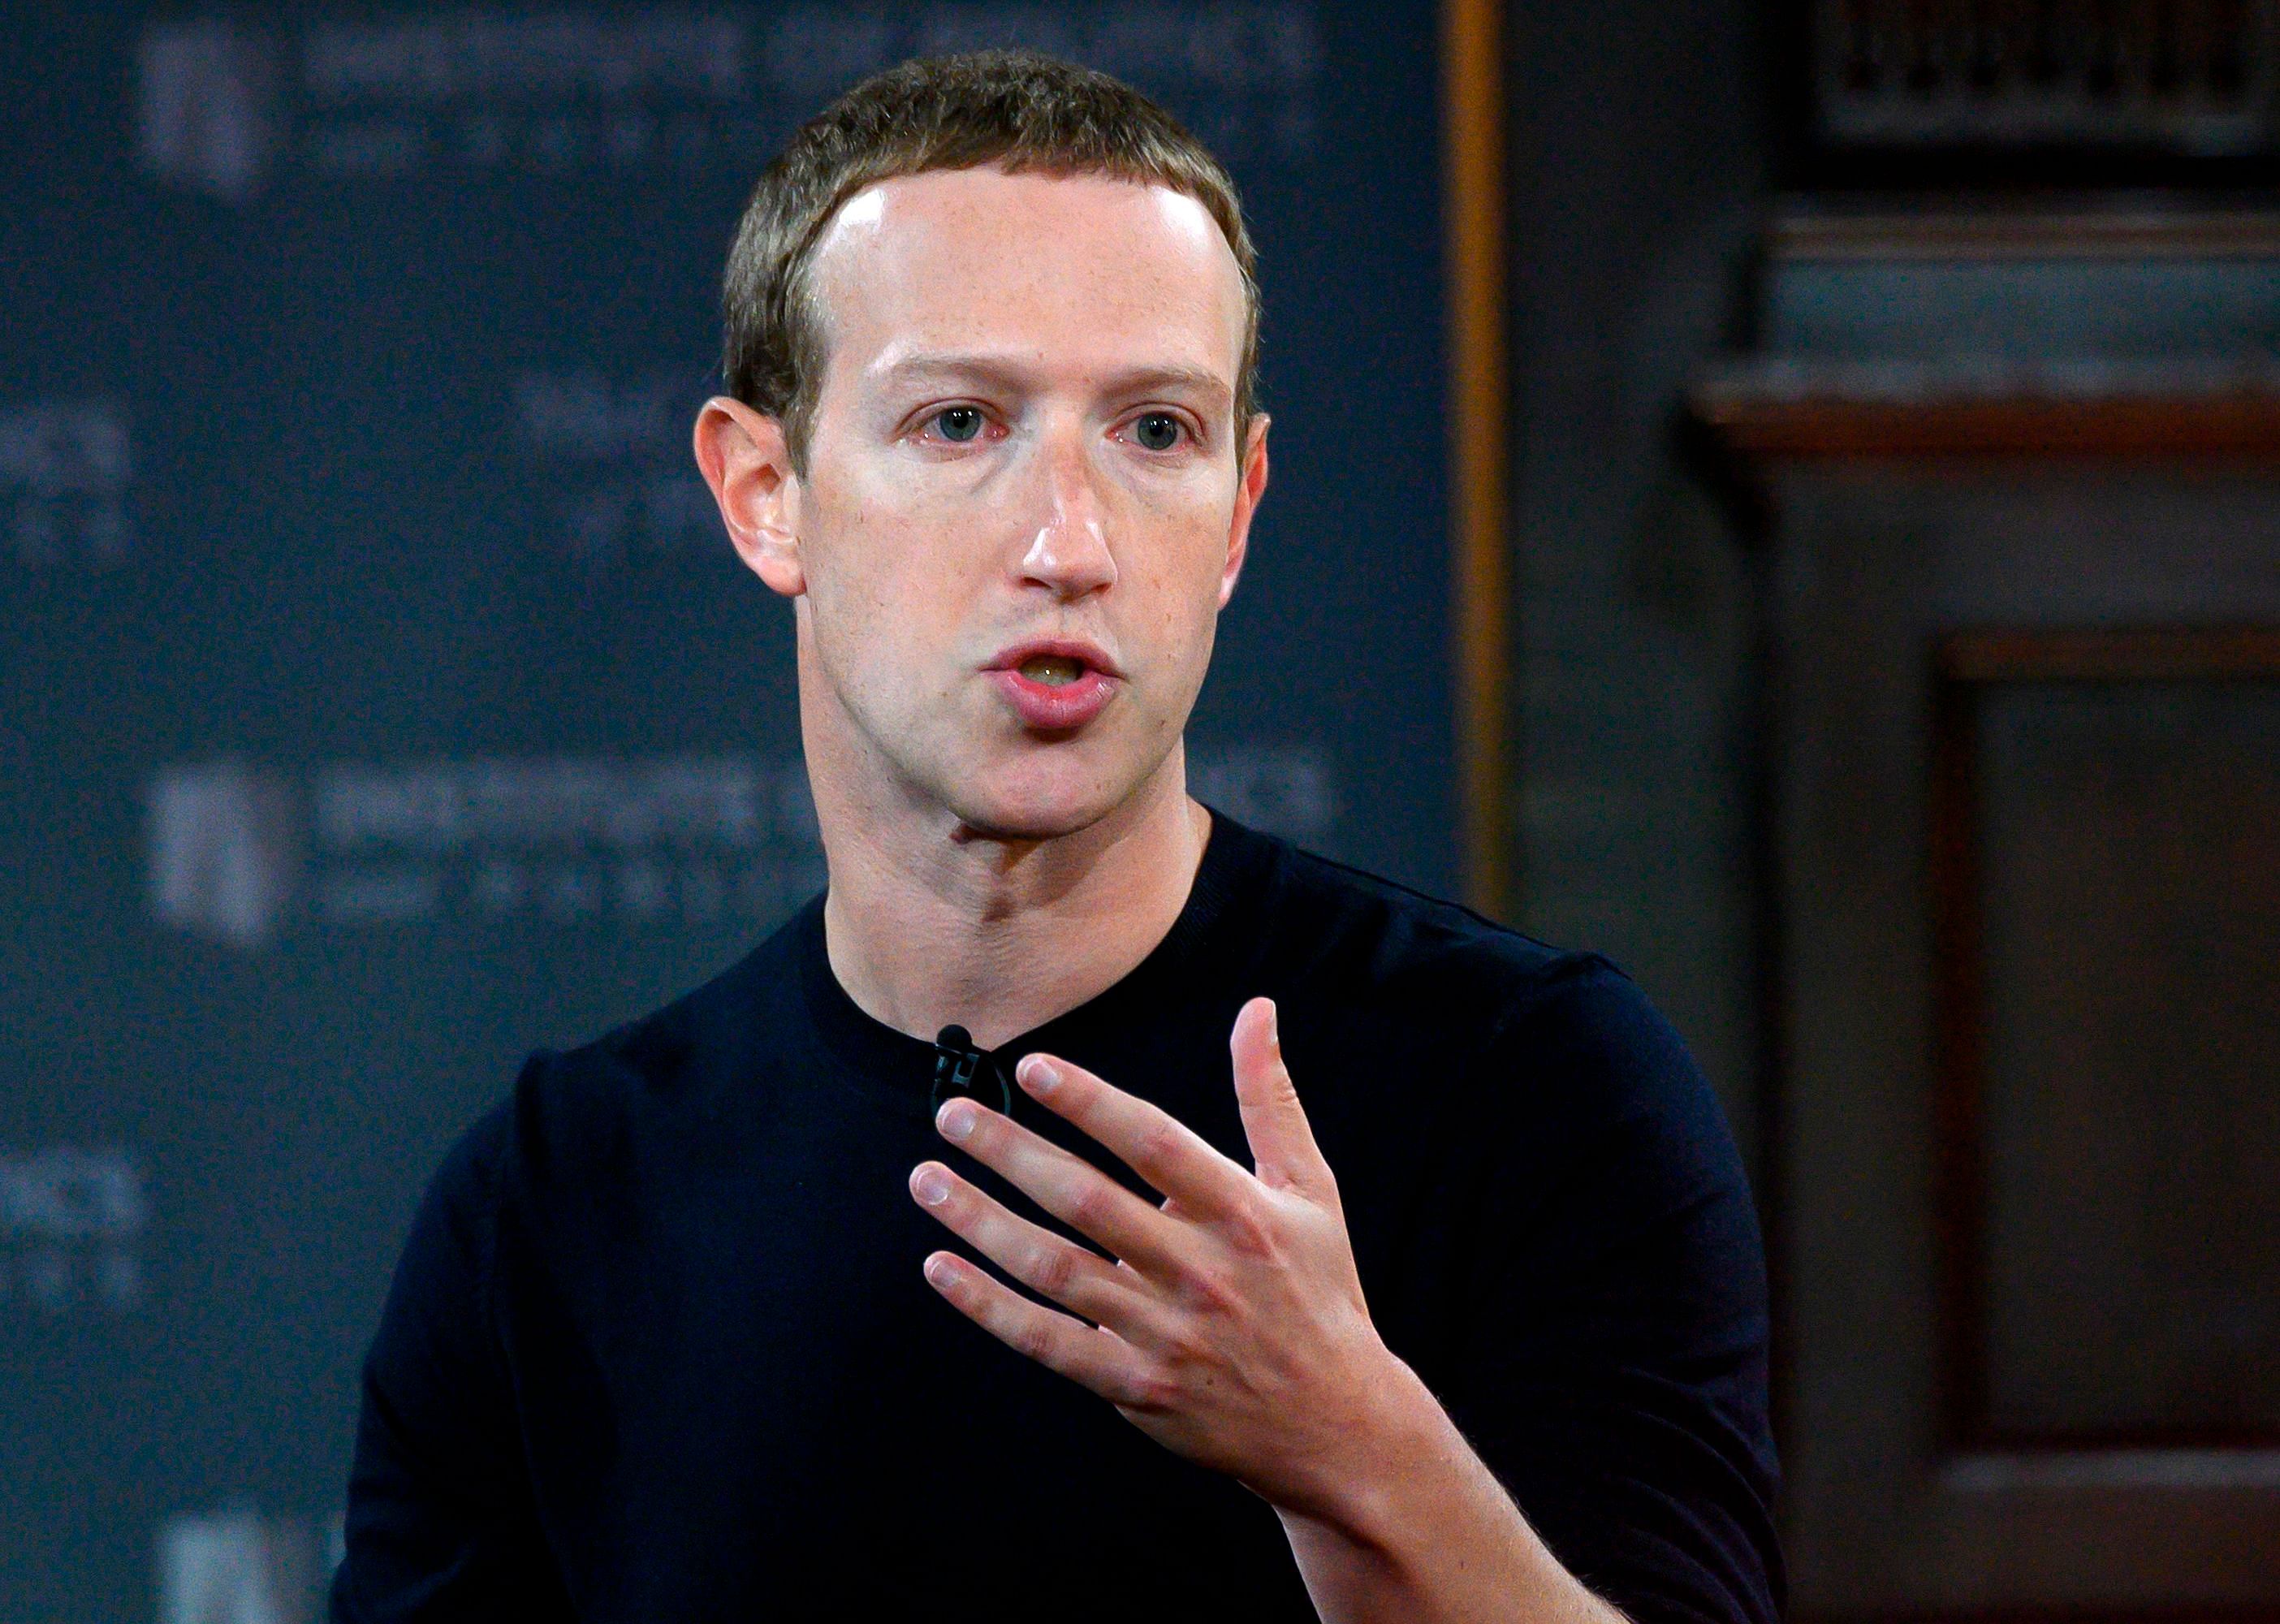 Facebook founder Mark Zuckerberg. (AFP Photo)